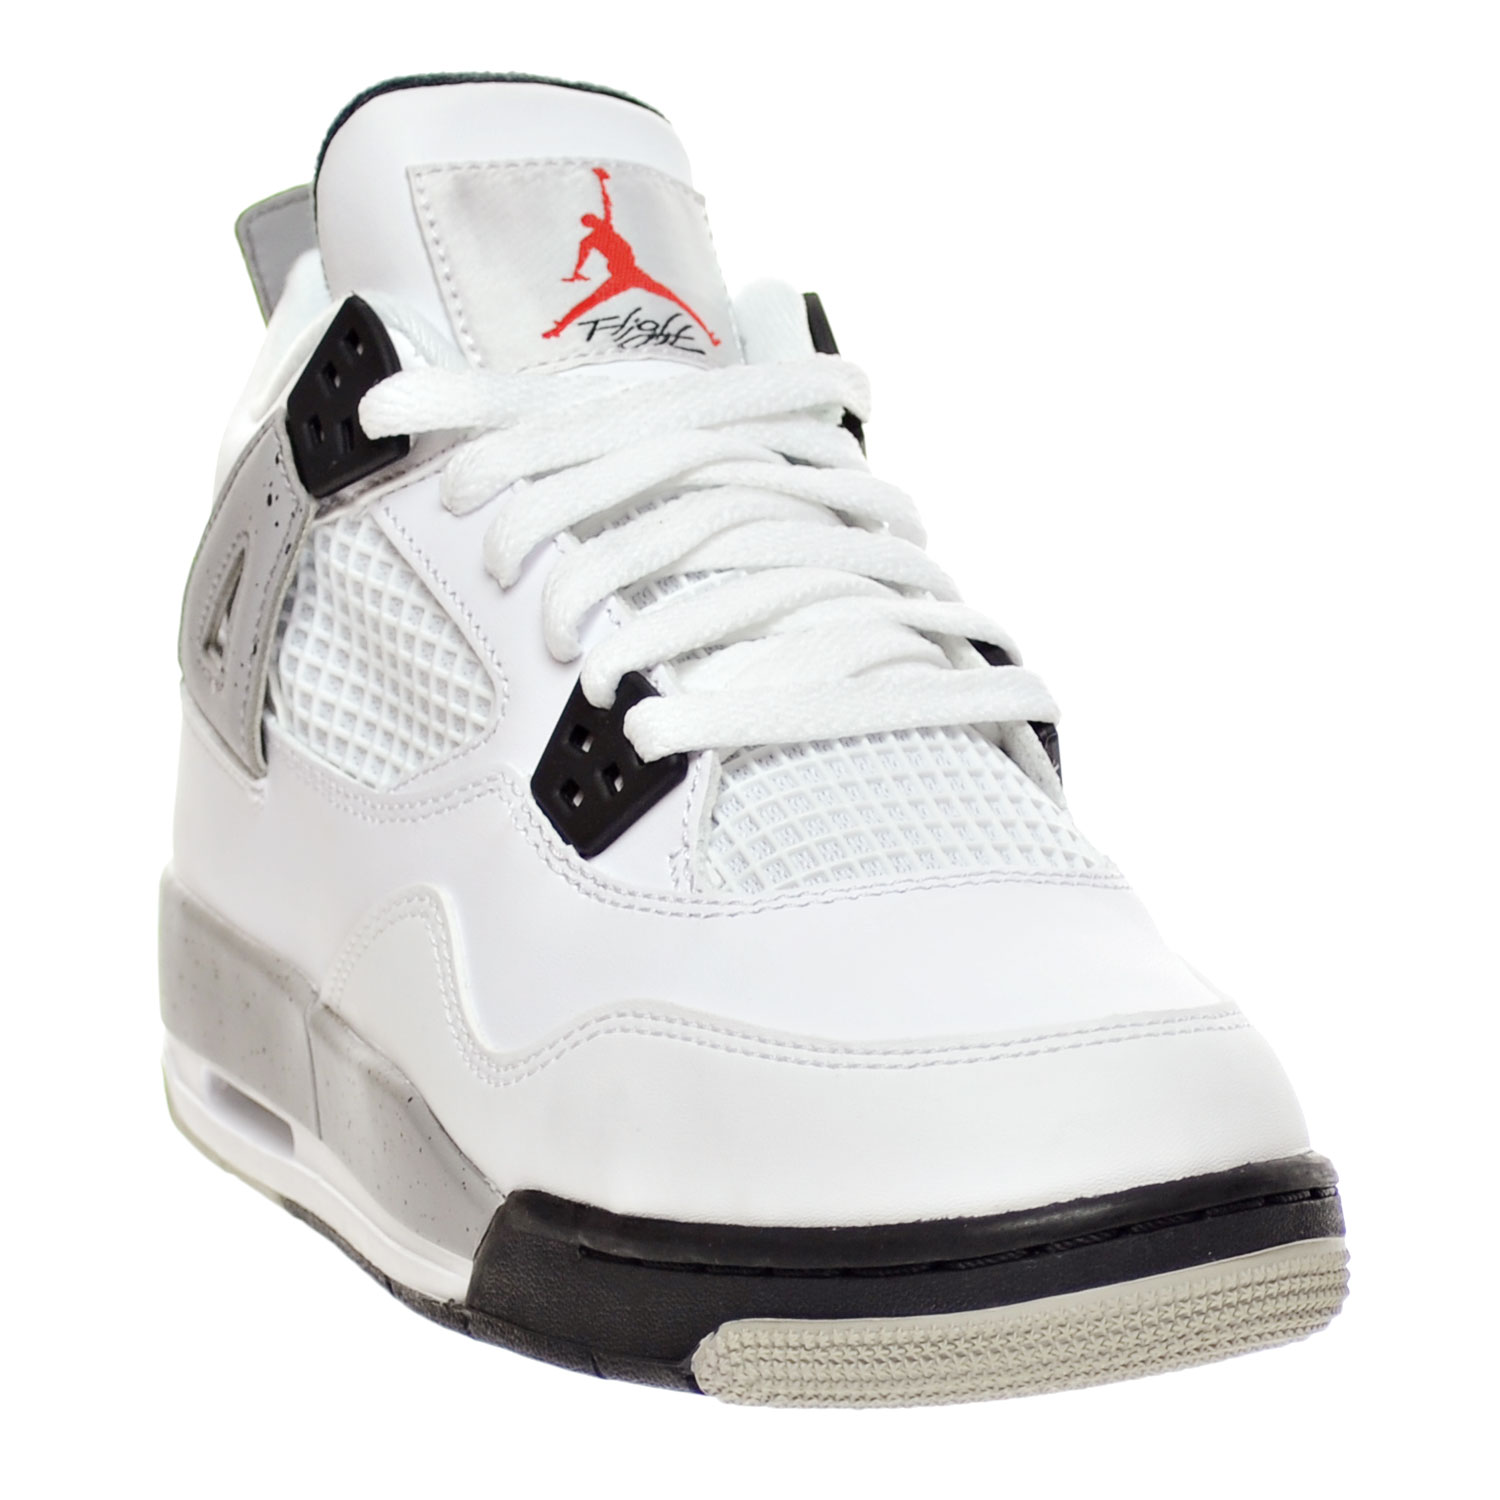 Air Jordan 4 Retro OG BG 'Cement' Big Kids Shoes White-Red-Black-Grey ...